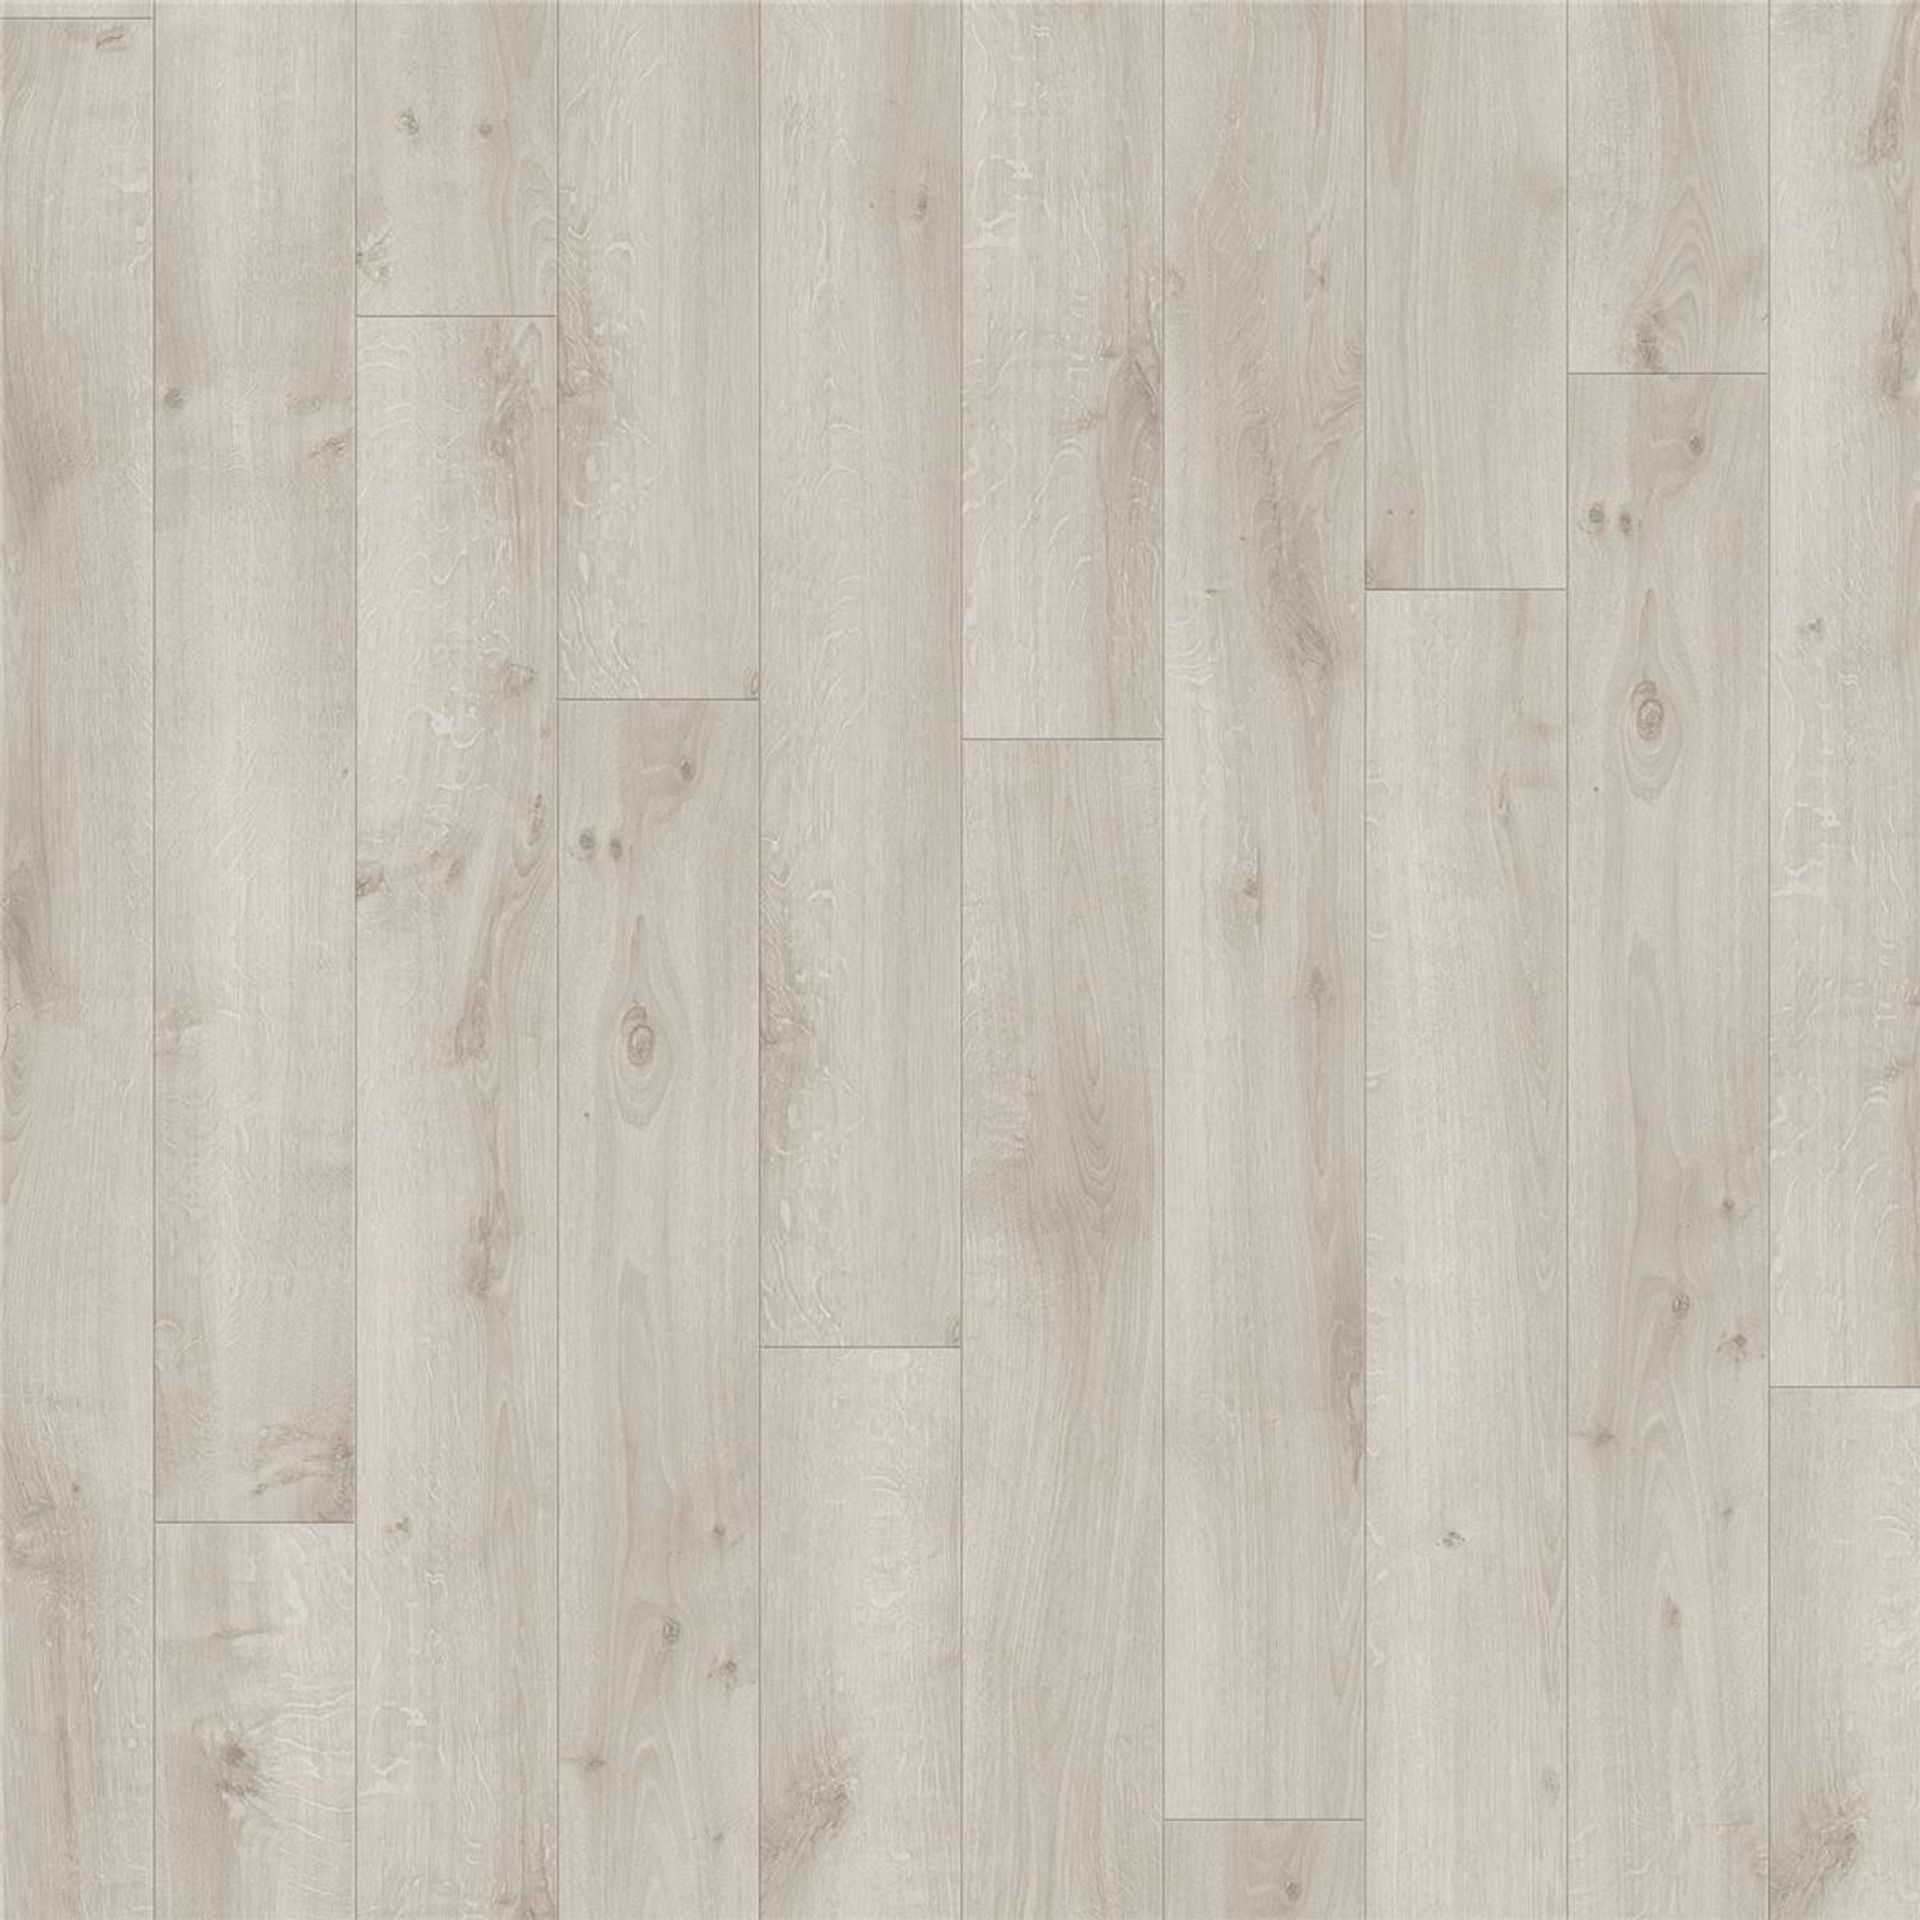 Designboden CLASSICS-Rustic Oak-Light Grey Planke 120 cm x 20 cm - Nutzschichtdicke 0,55 mm